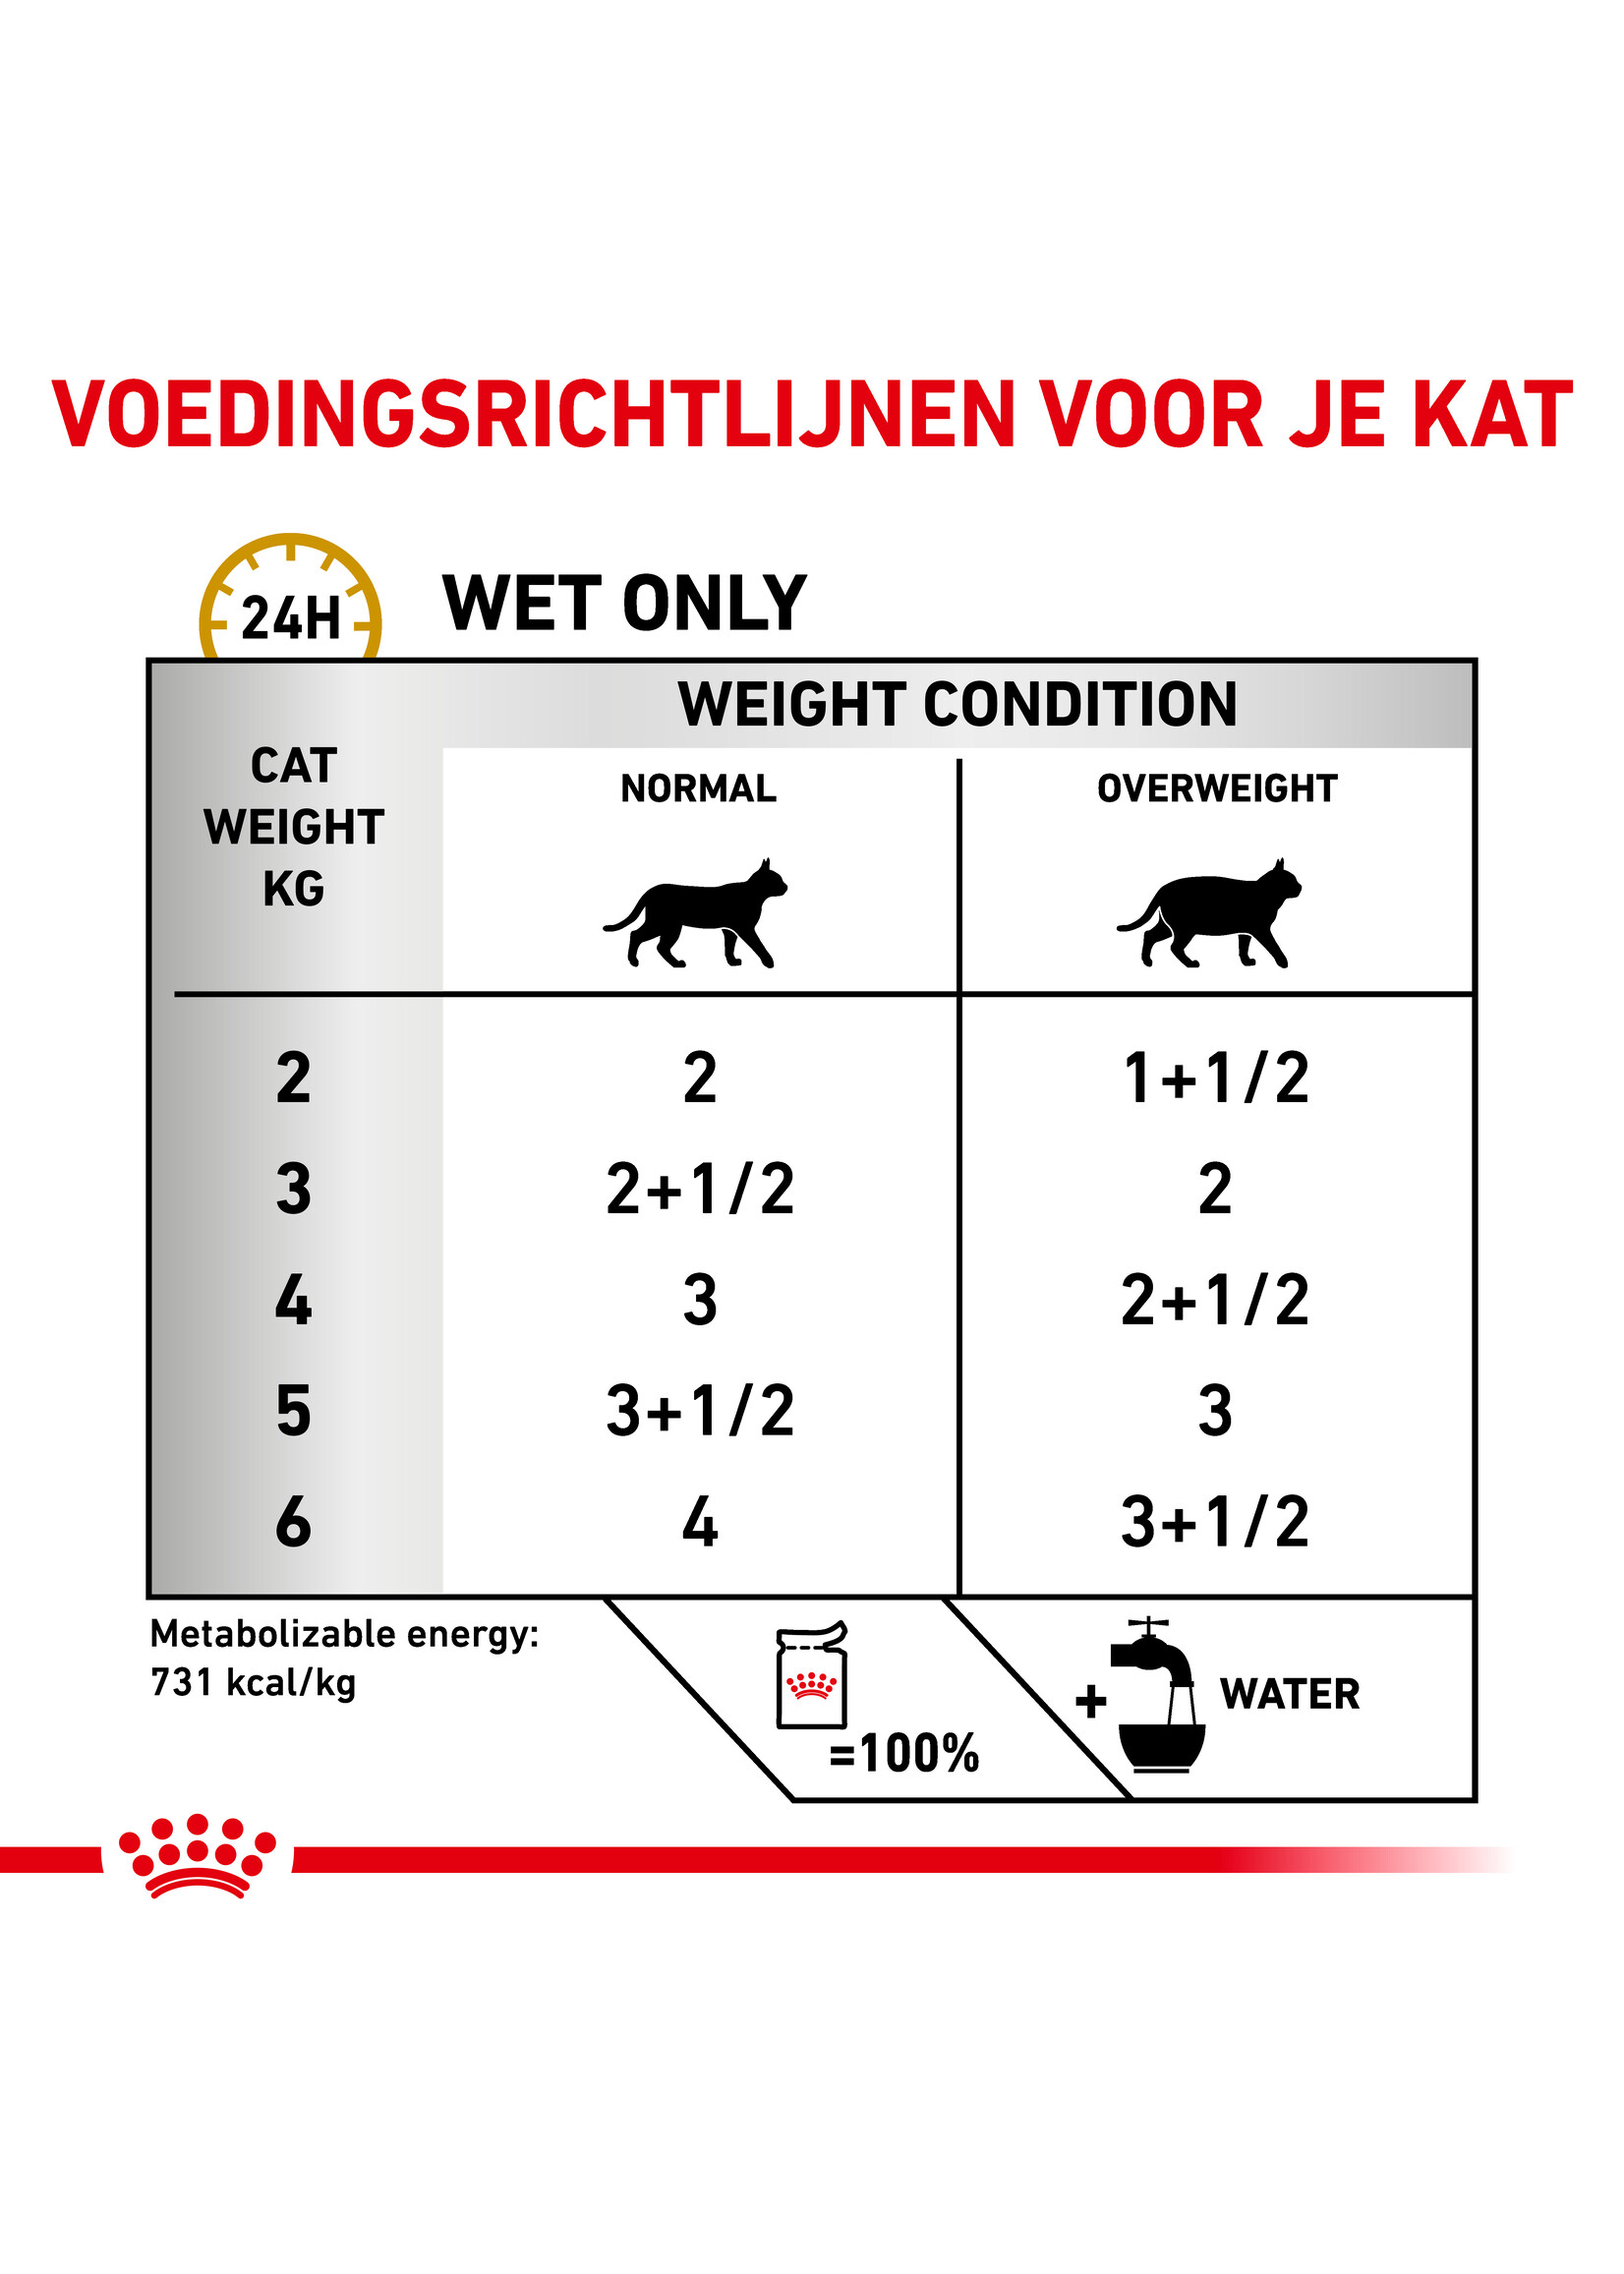 Royal Canin Royal Canin Urinary S/O Moderate Calorie Kat - Maaltijdzakjes